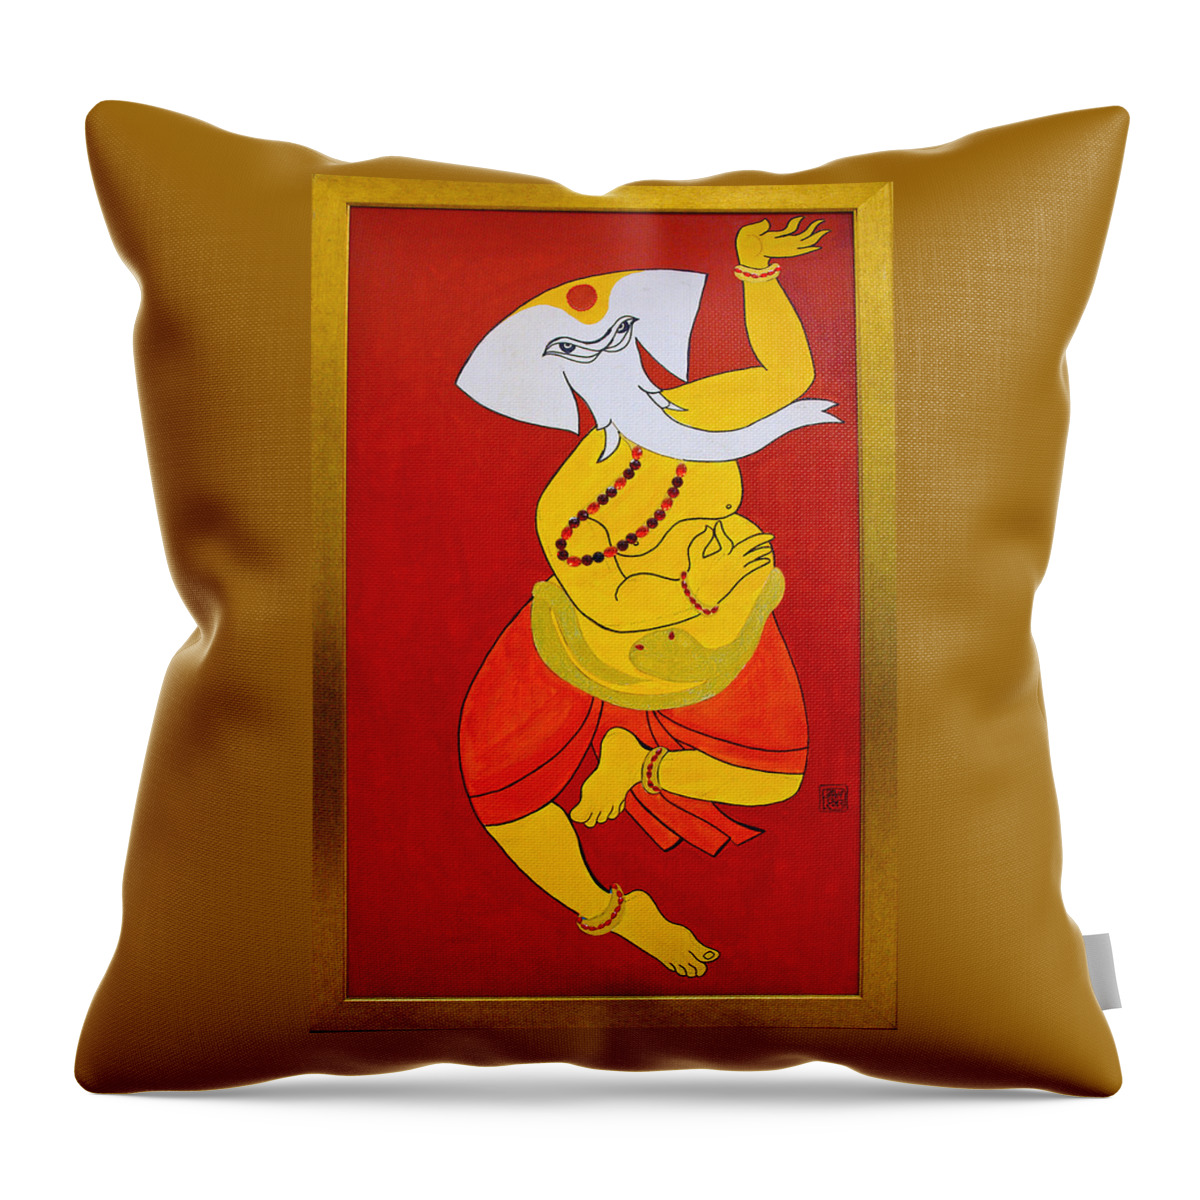 Ganesha Throw Pillow featuring the painting Dancing Ganesha by Guruji Aruneshvar Paris Art Curator Katrin Suter